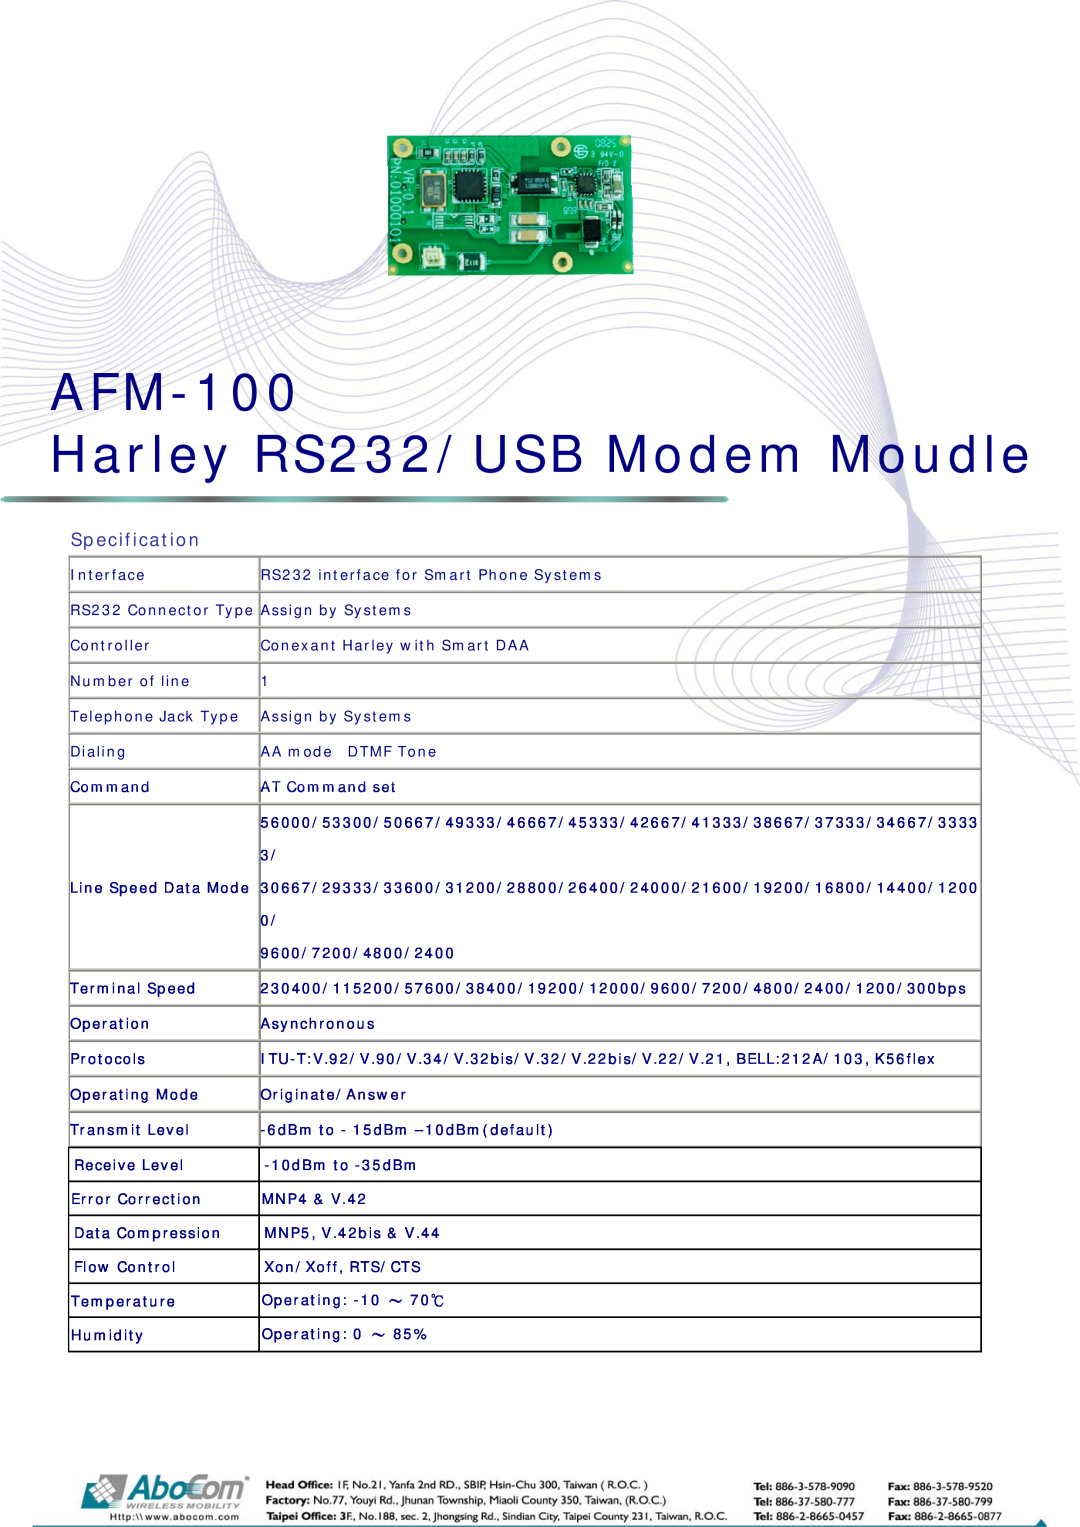 Abocom manual AFM-100 Harley RS232/USB Modem Moudle, Specification 